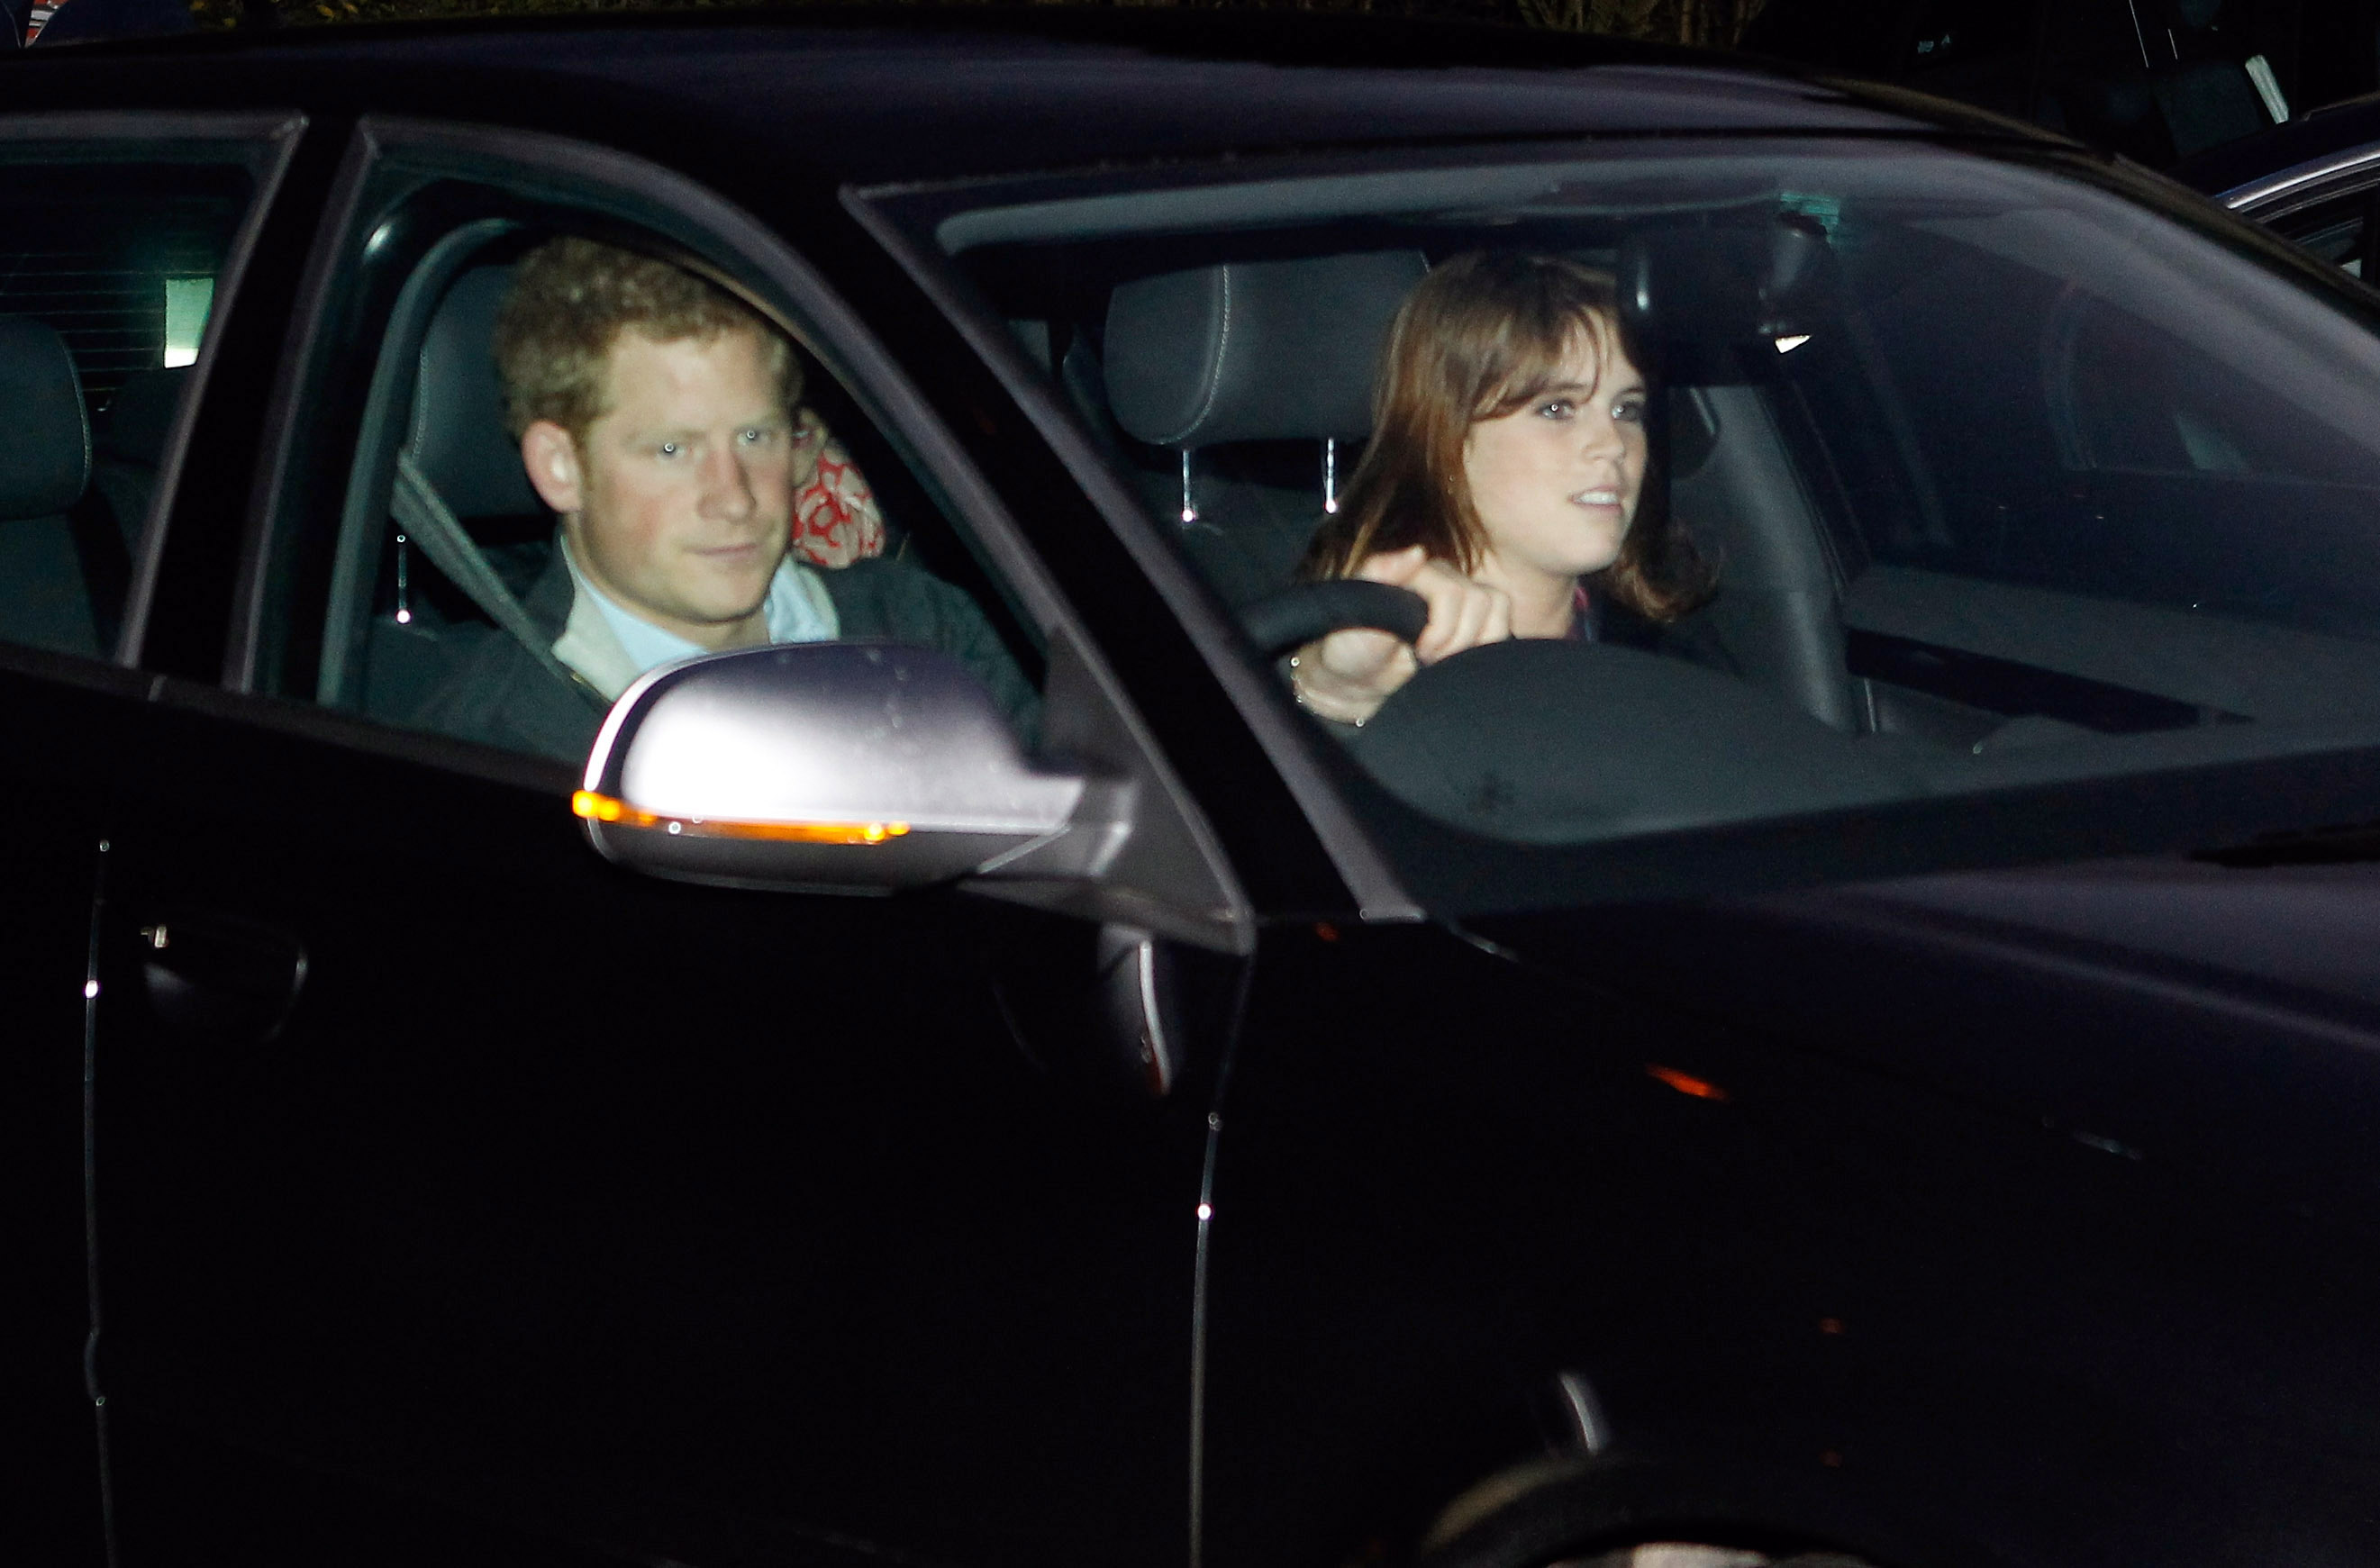 Prince Harry drives him and Princess Eugenie